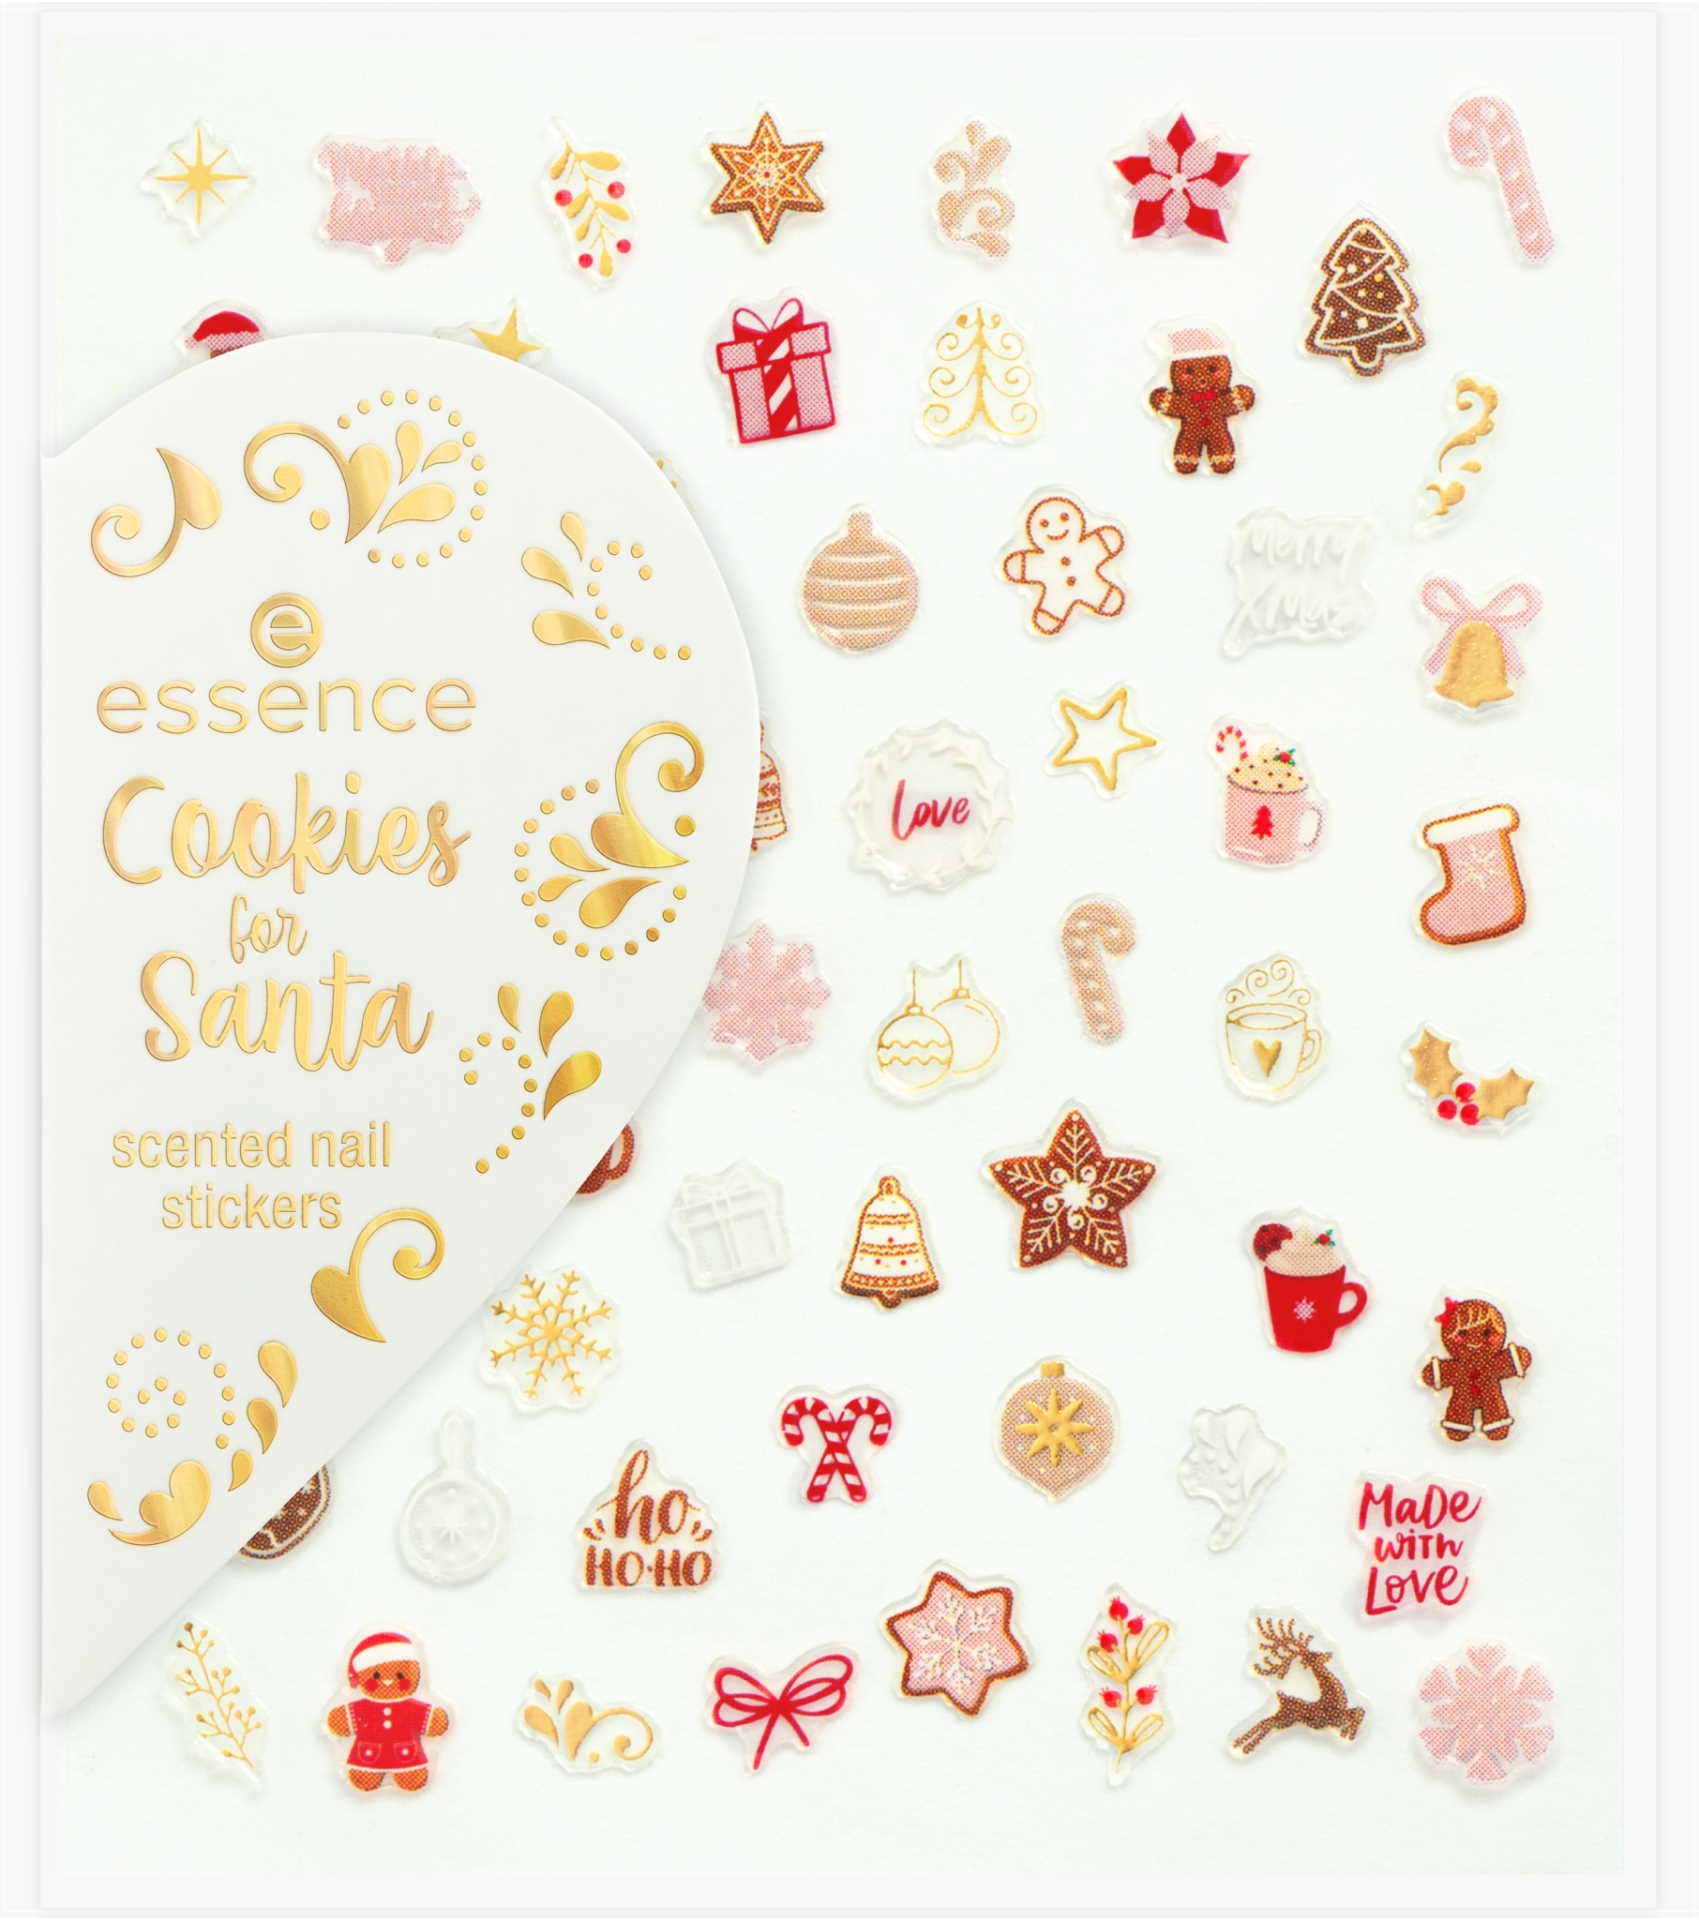 essence kolekcija „Cookies for Santa“ donosi beauty poslastice